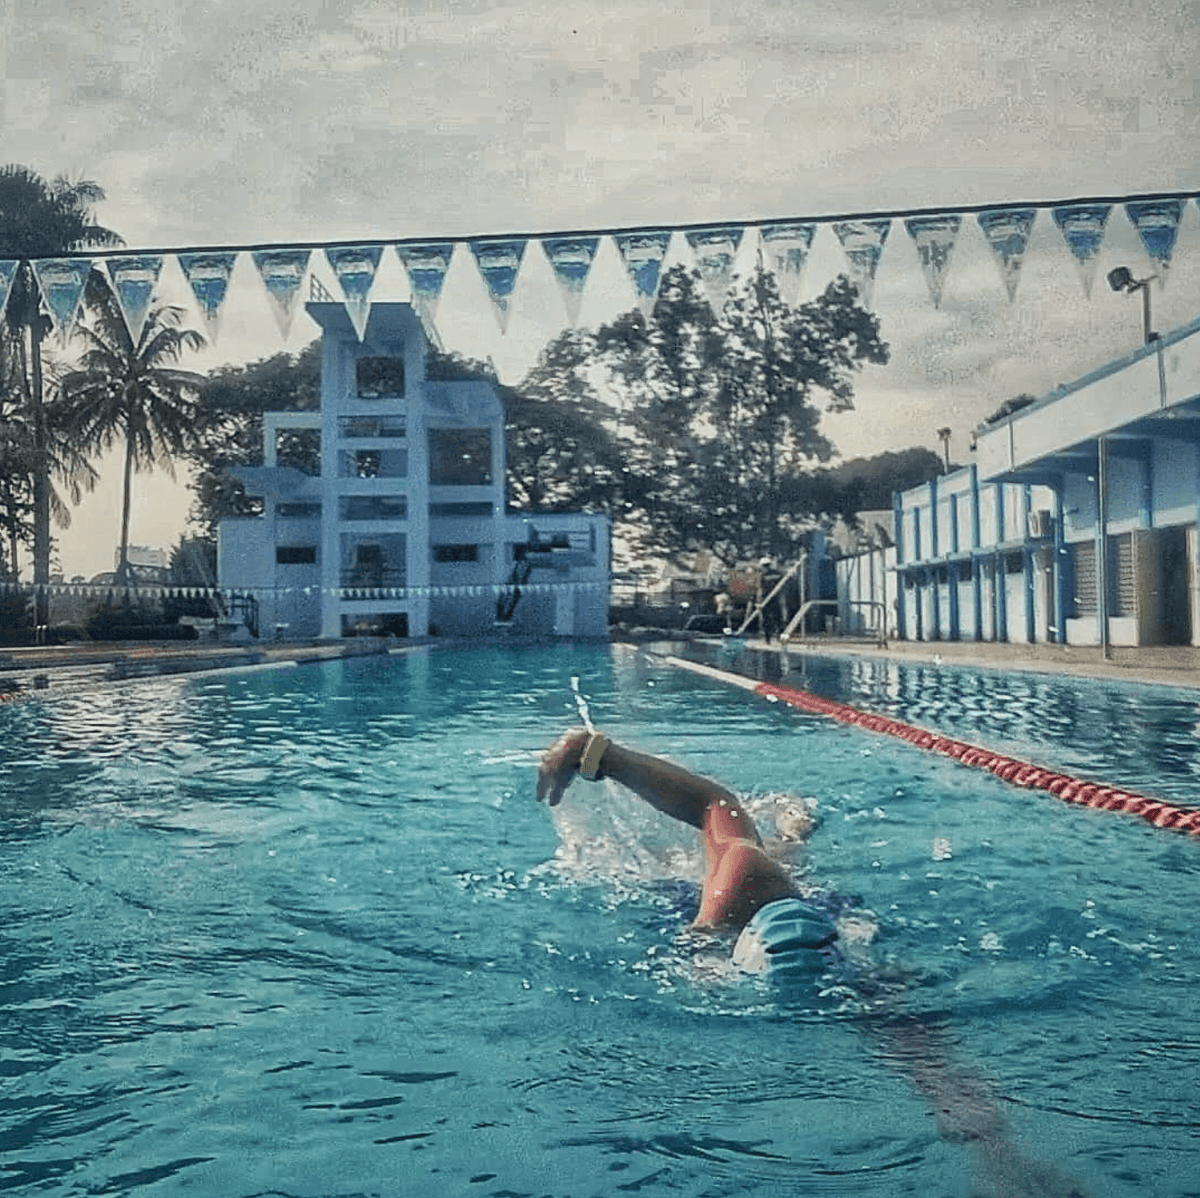  Waterproof Sanitary Pads For Swimming